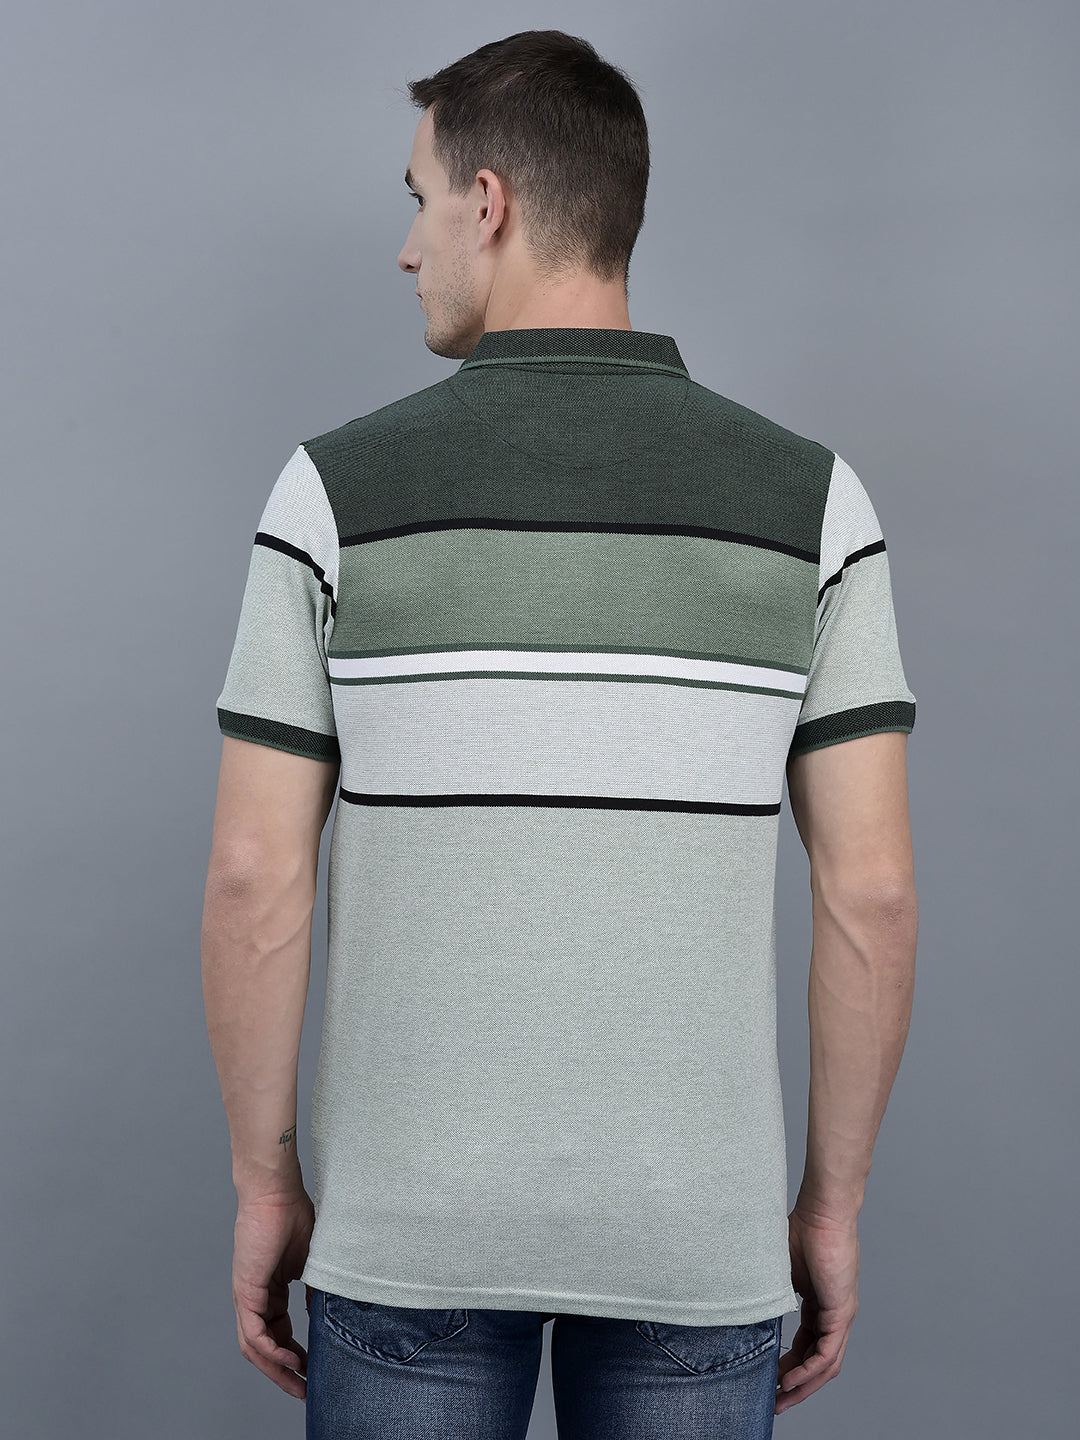 Cobb Green Striped Polo Neck T-Shirt